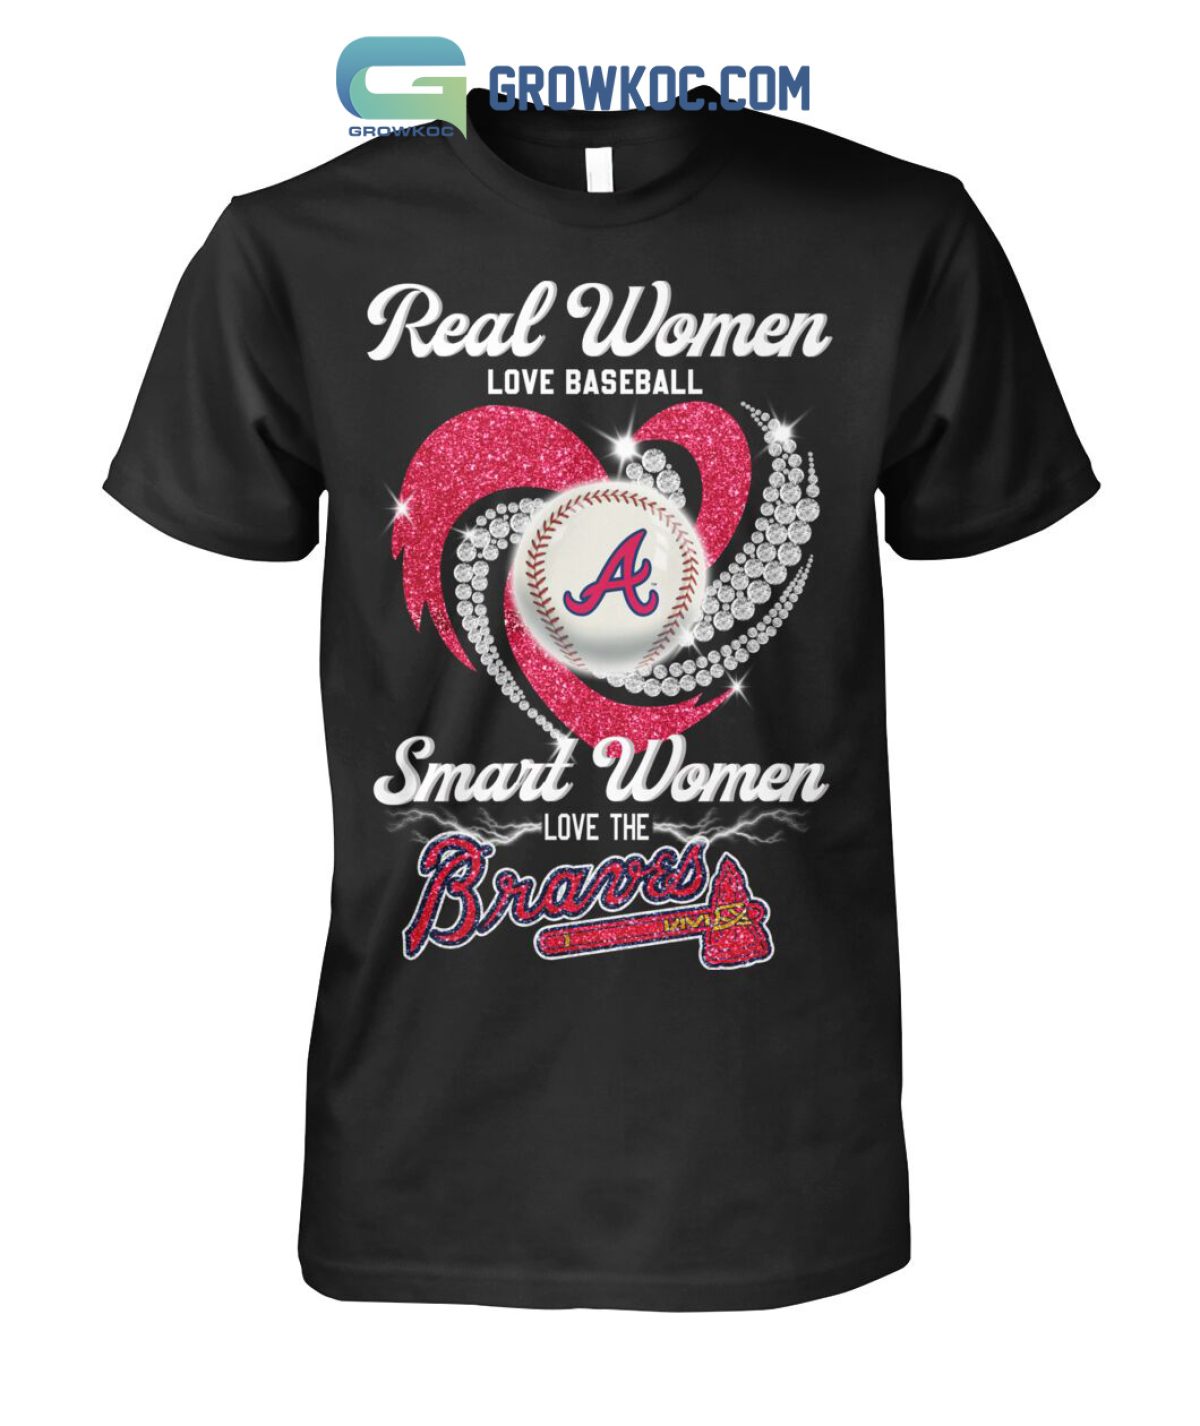 Atlanta Braves MLB Baseball Heather Gray Sublimated T-Shirt XXXL